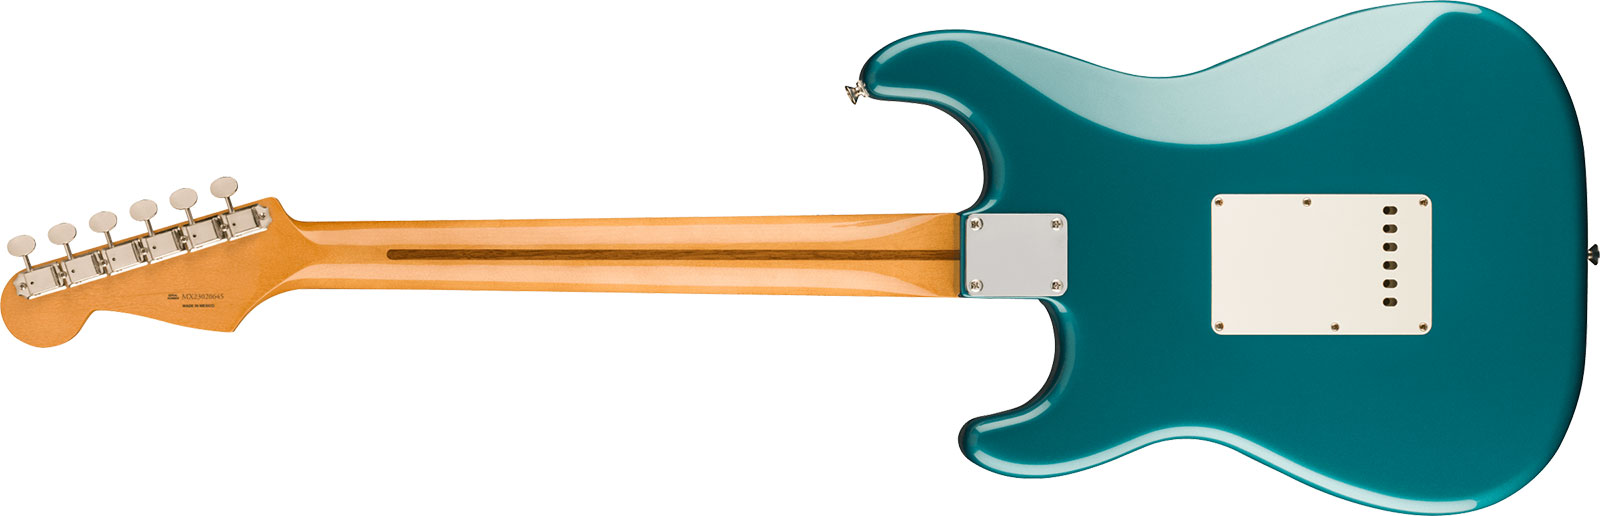 Fender Strat 50s Vintera 2 Mex 3s Trem Mn - Ocean Turquoise - Str shape electric guitar - Variation 1